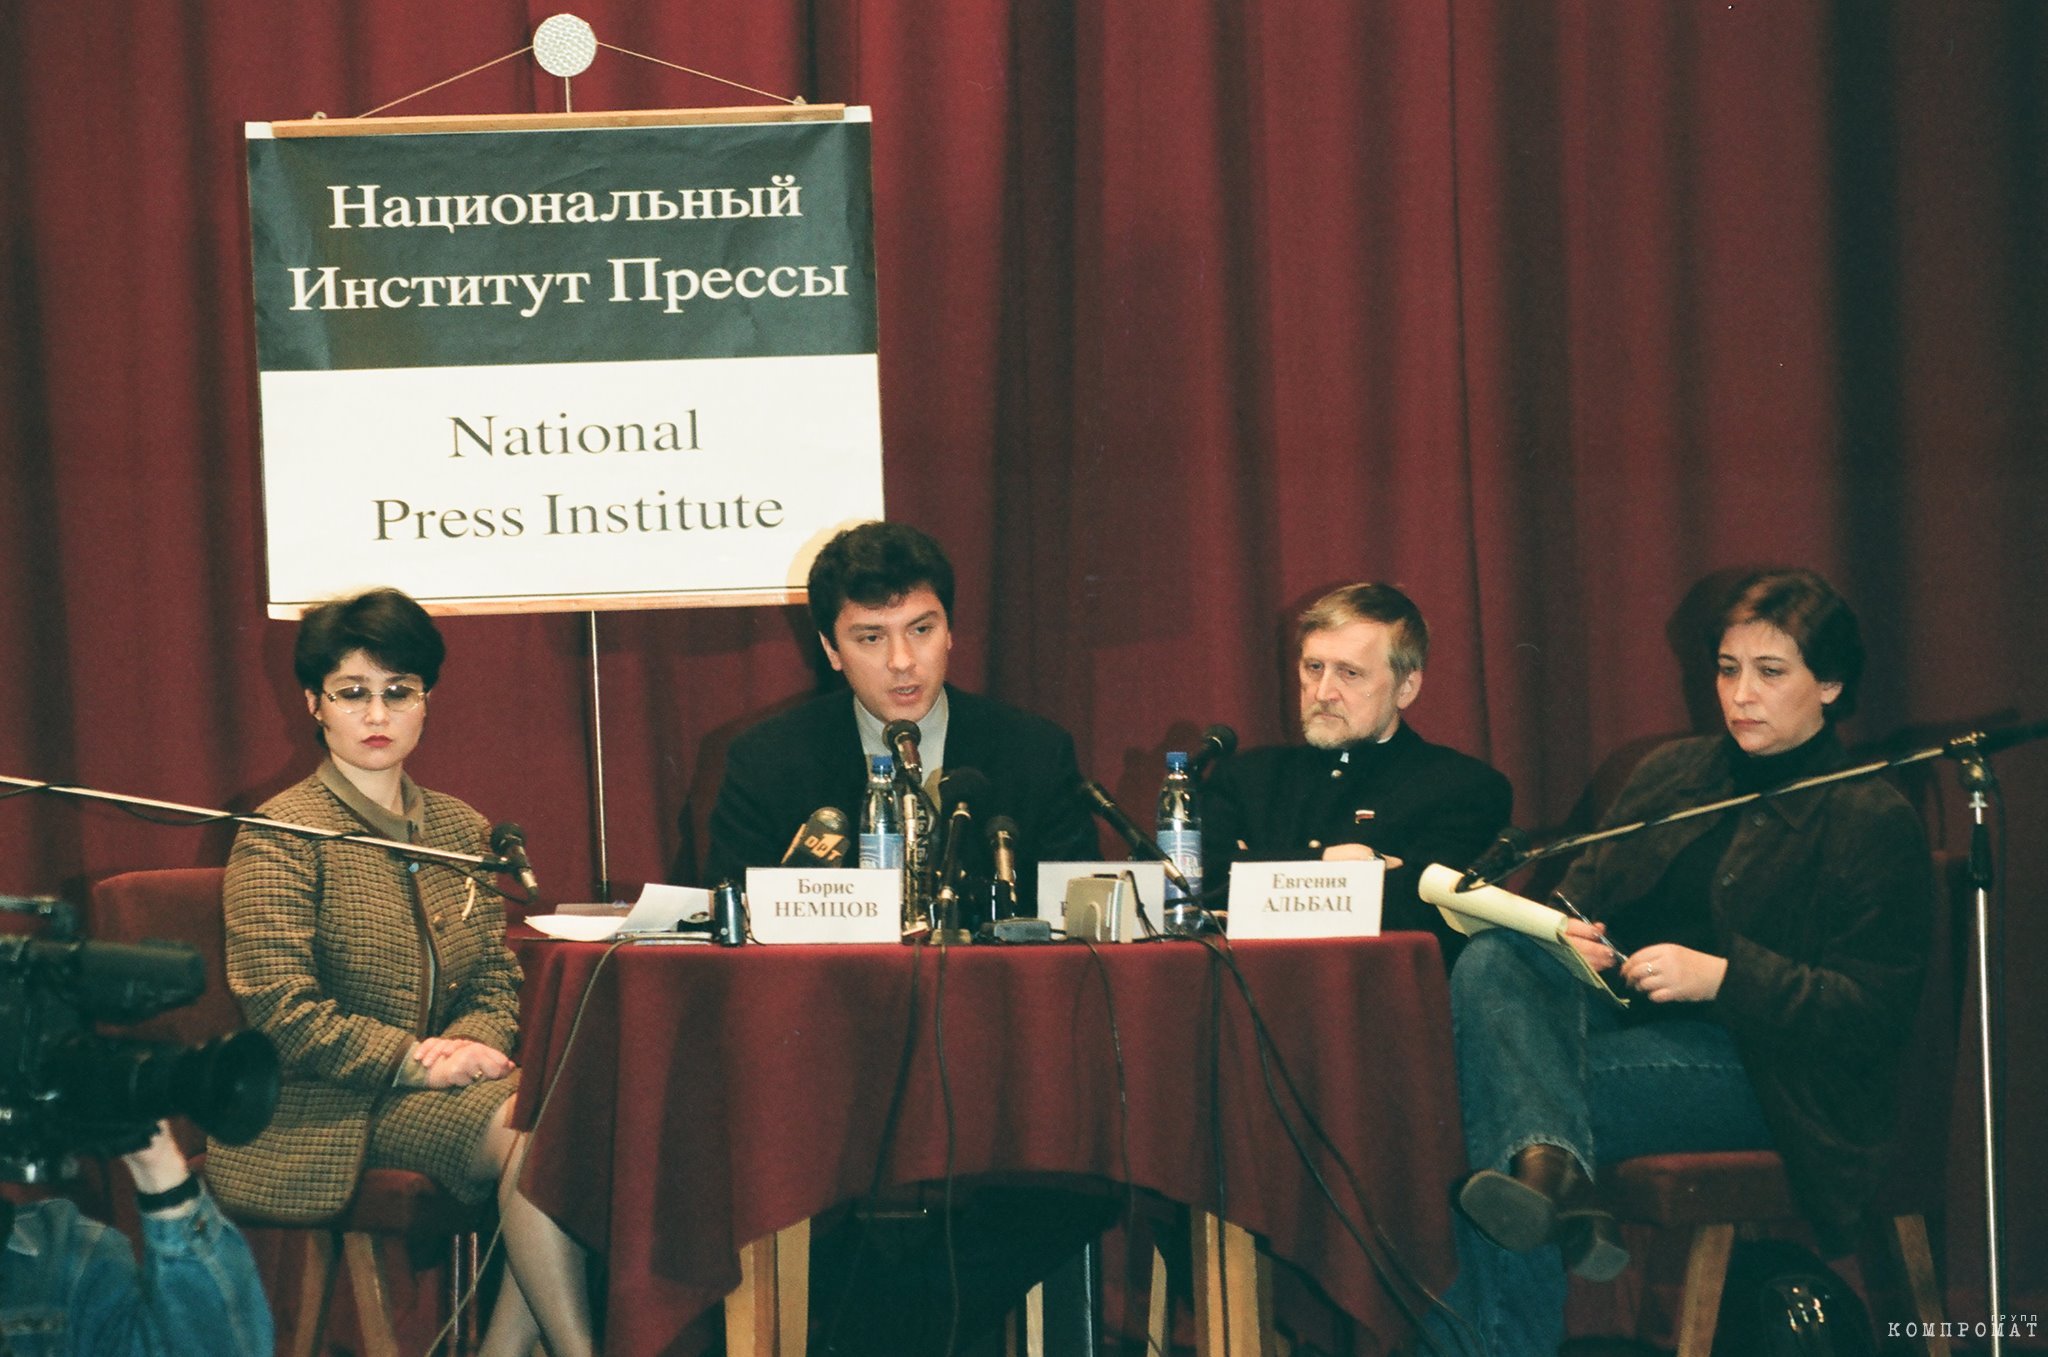 Evgenia Albats with Boris Nemtsov